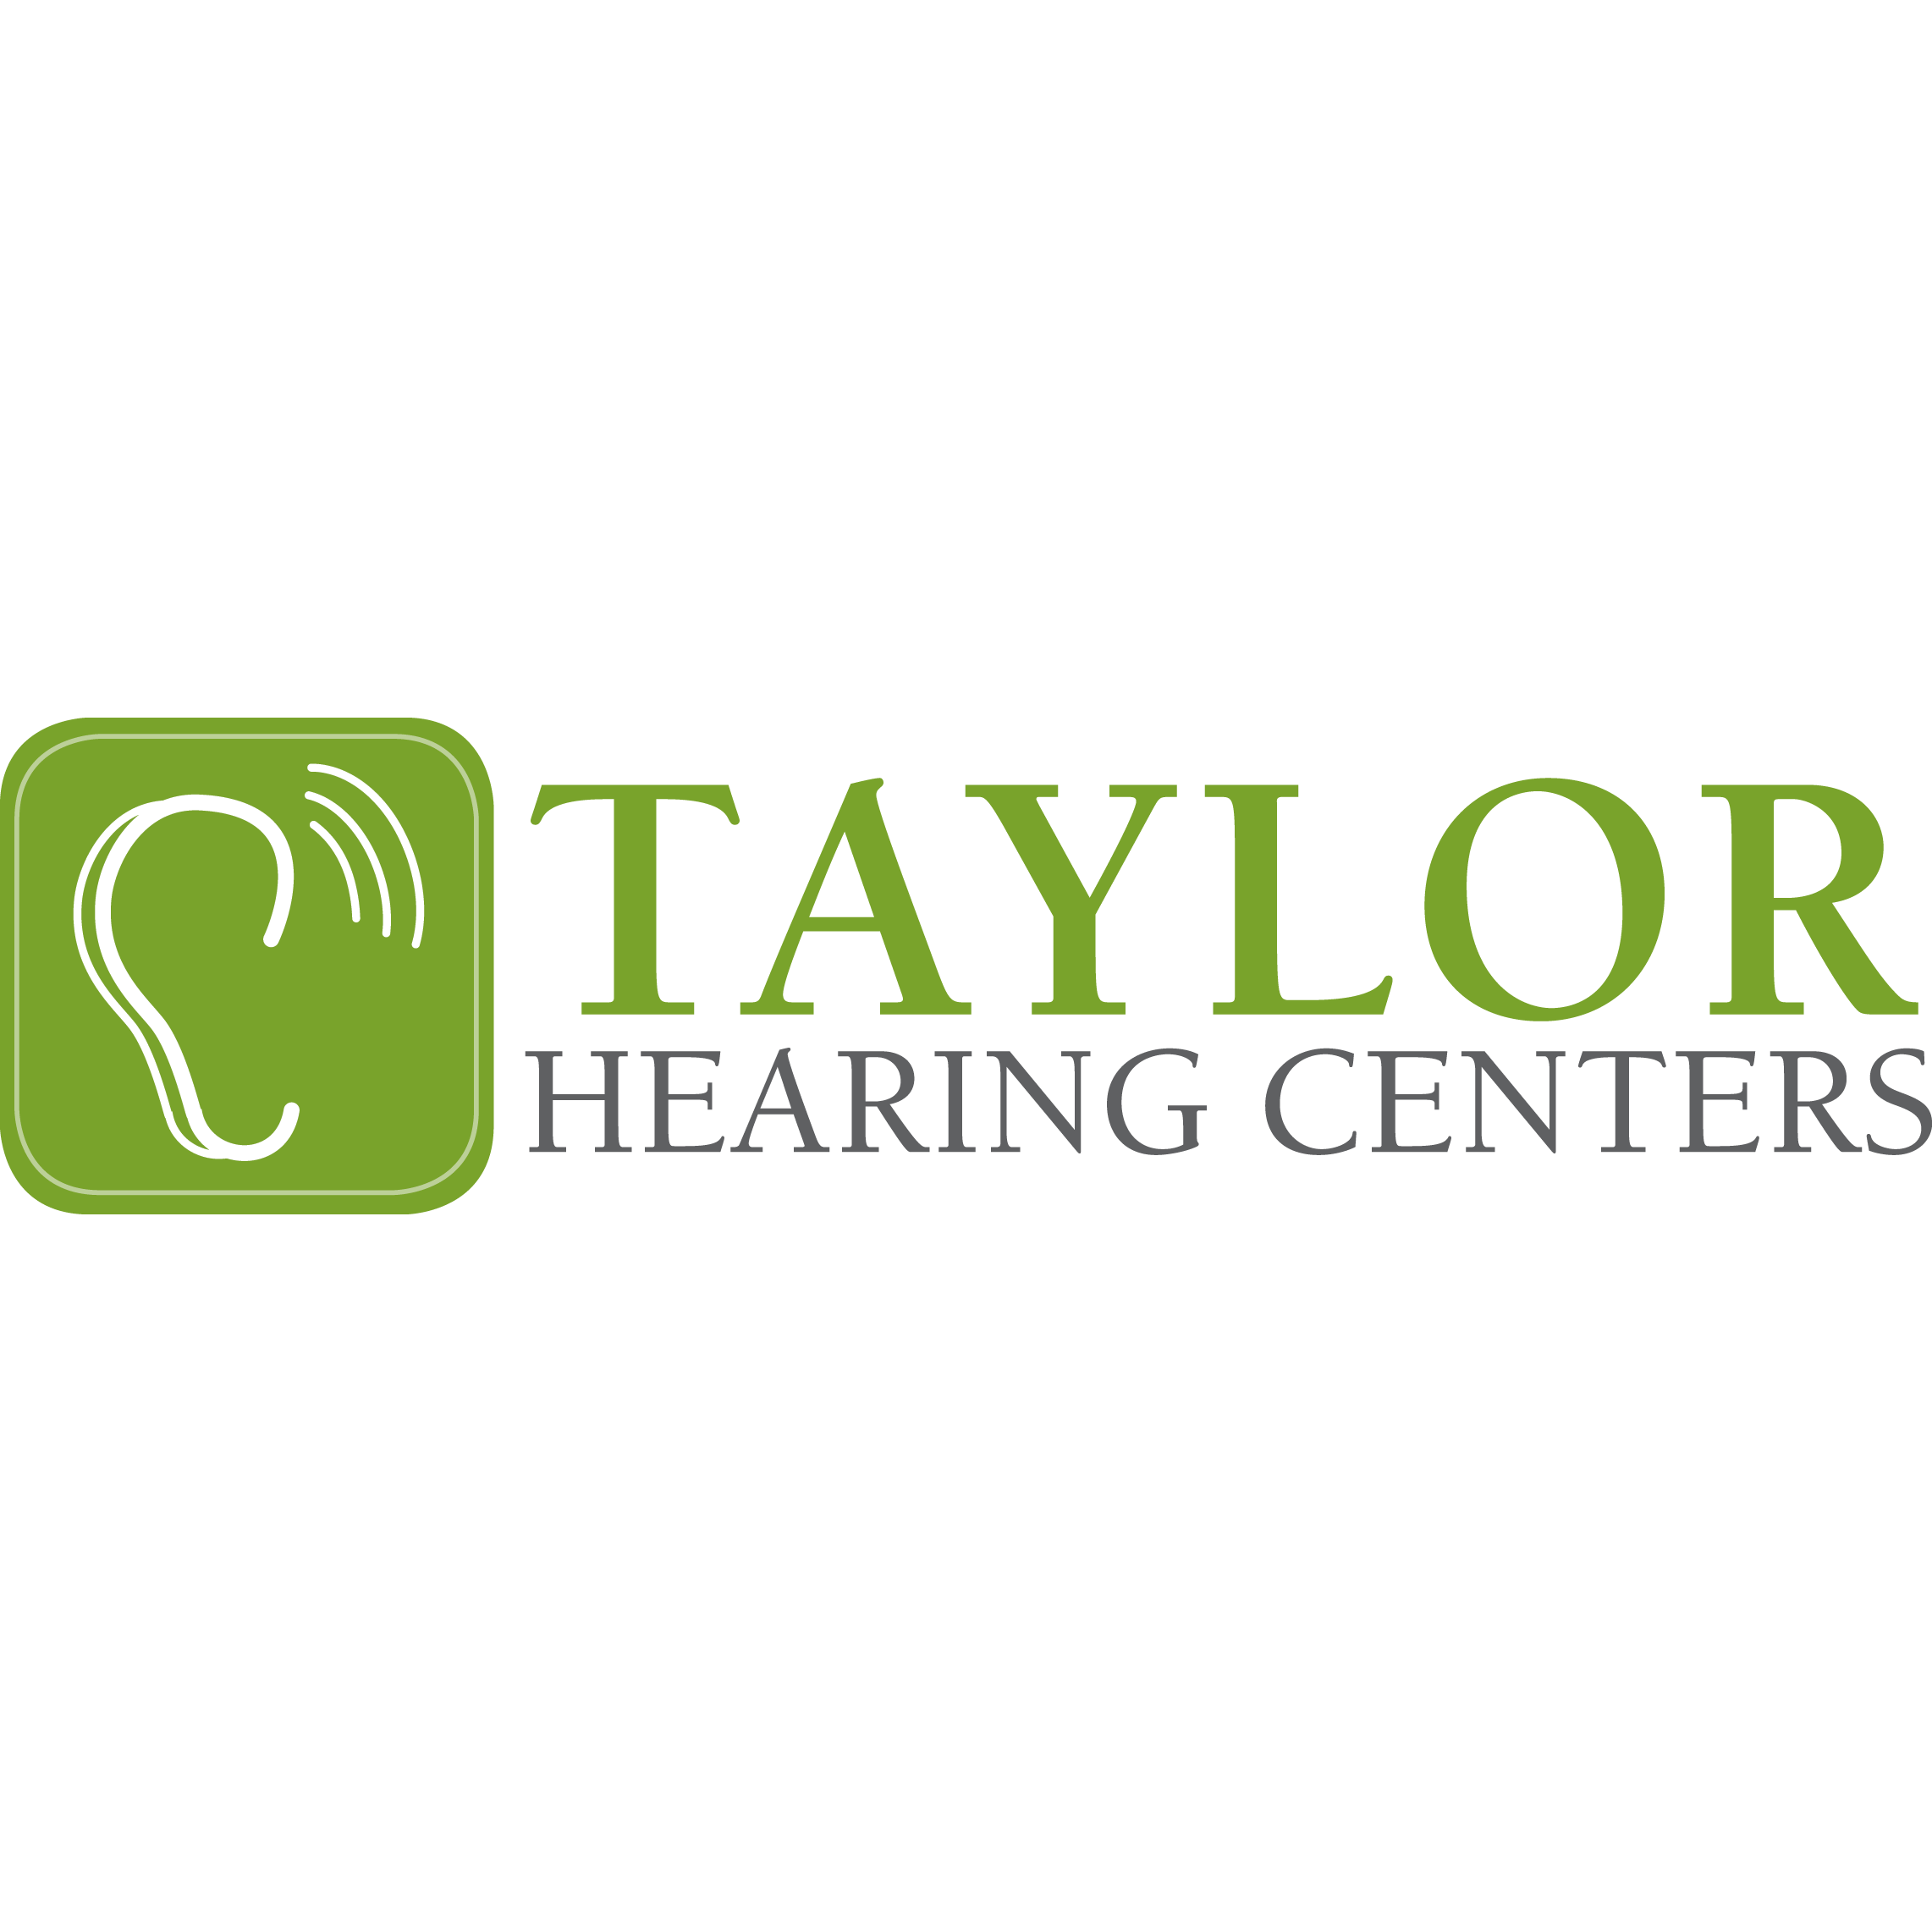 Taylor Hearing Centers - Jonesboro - Jonesboro, AR 72401 - (870)336-9669 | ShowMeLocal.com